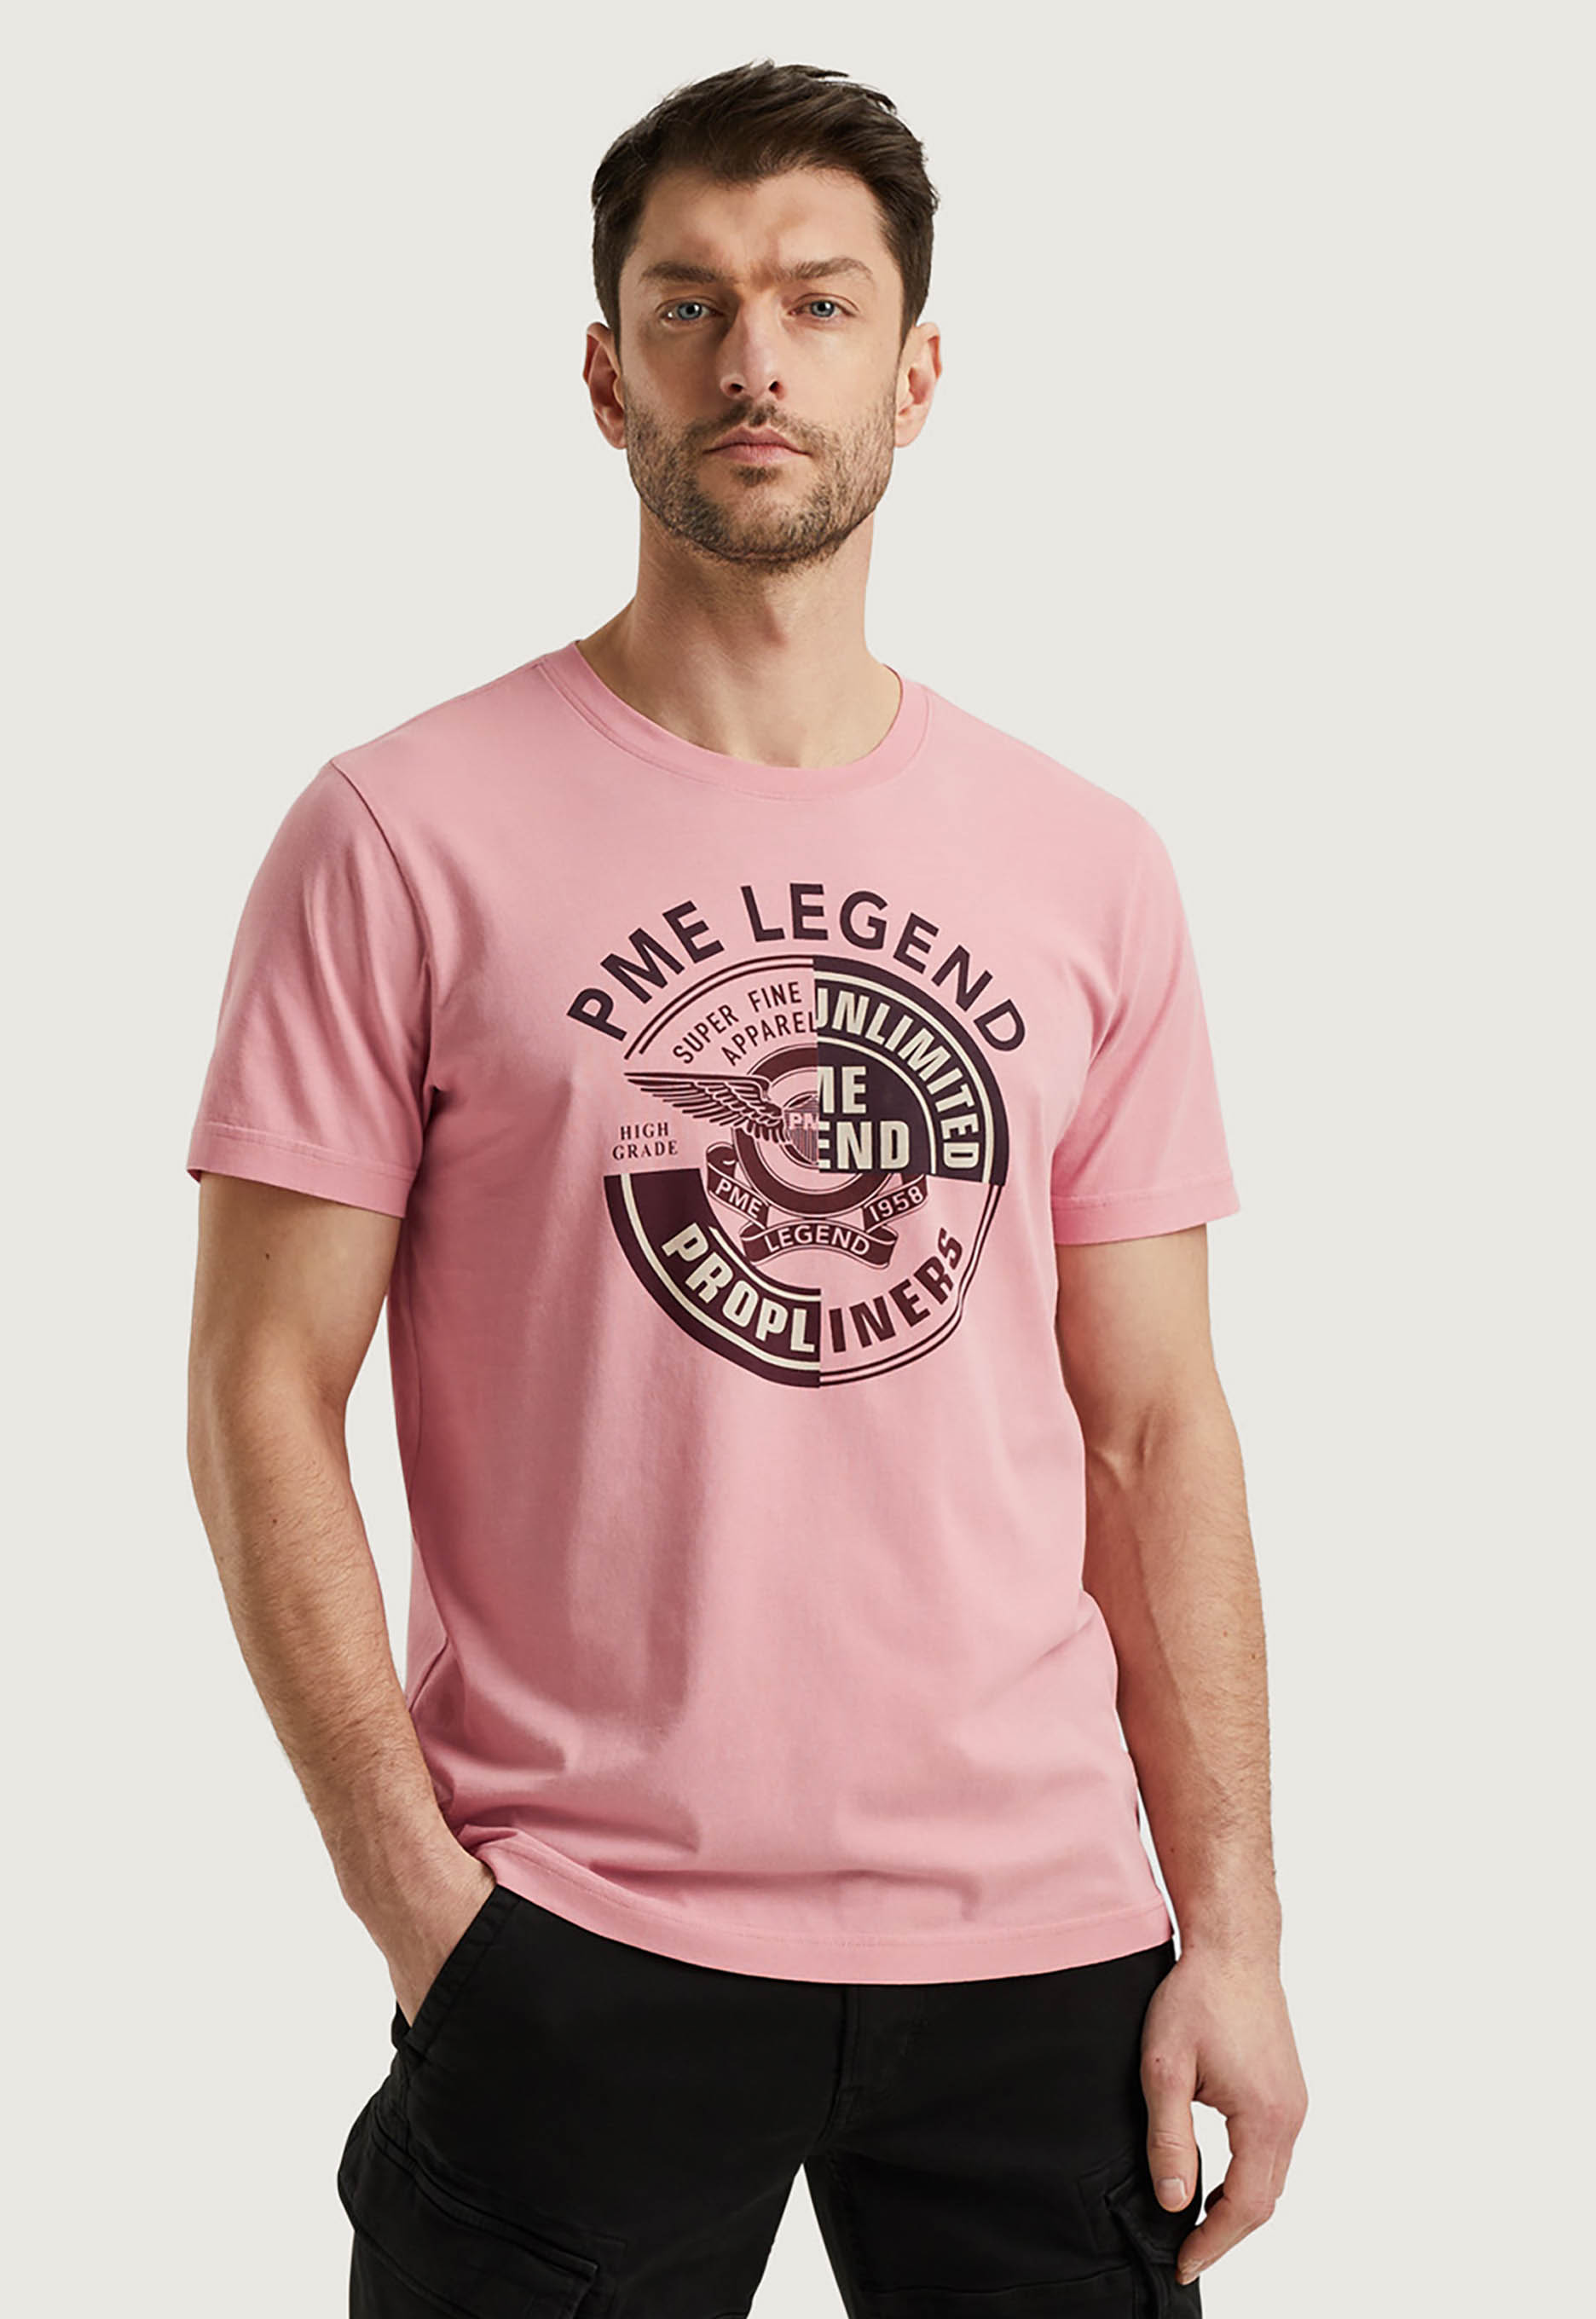 Pme legend Artwork T-shirt